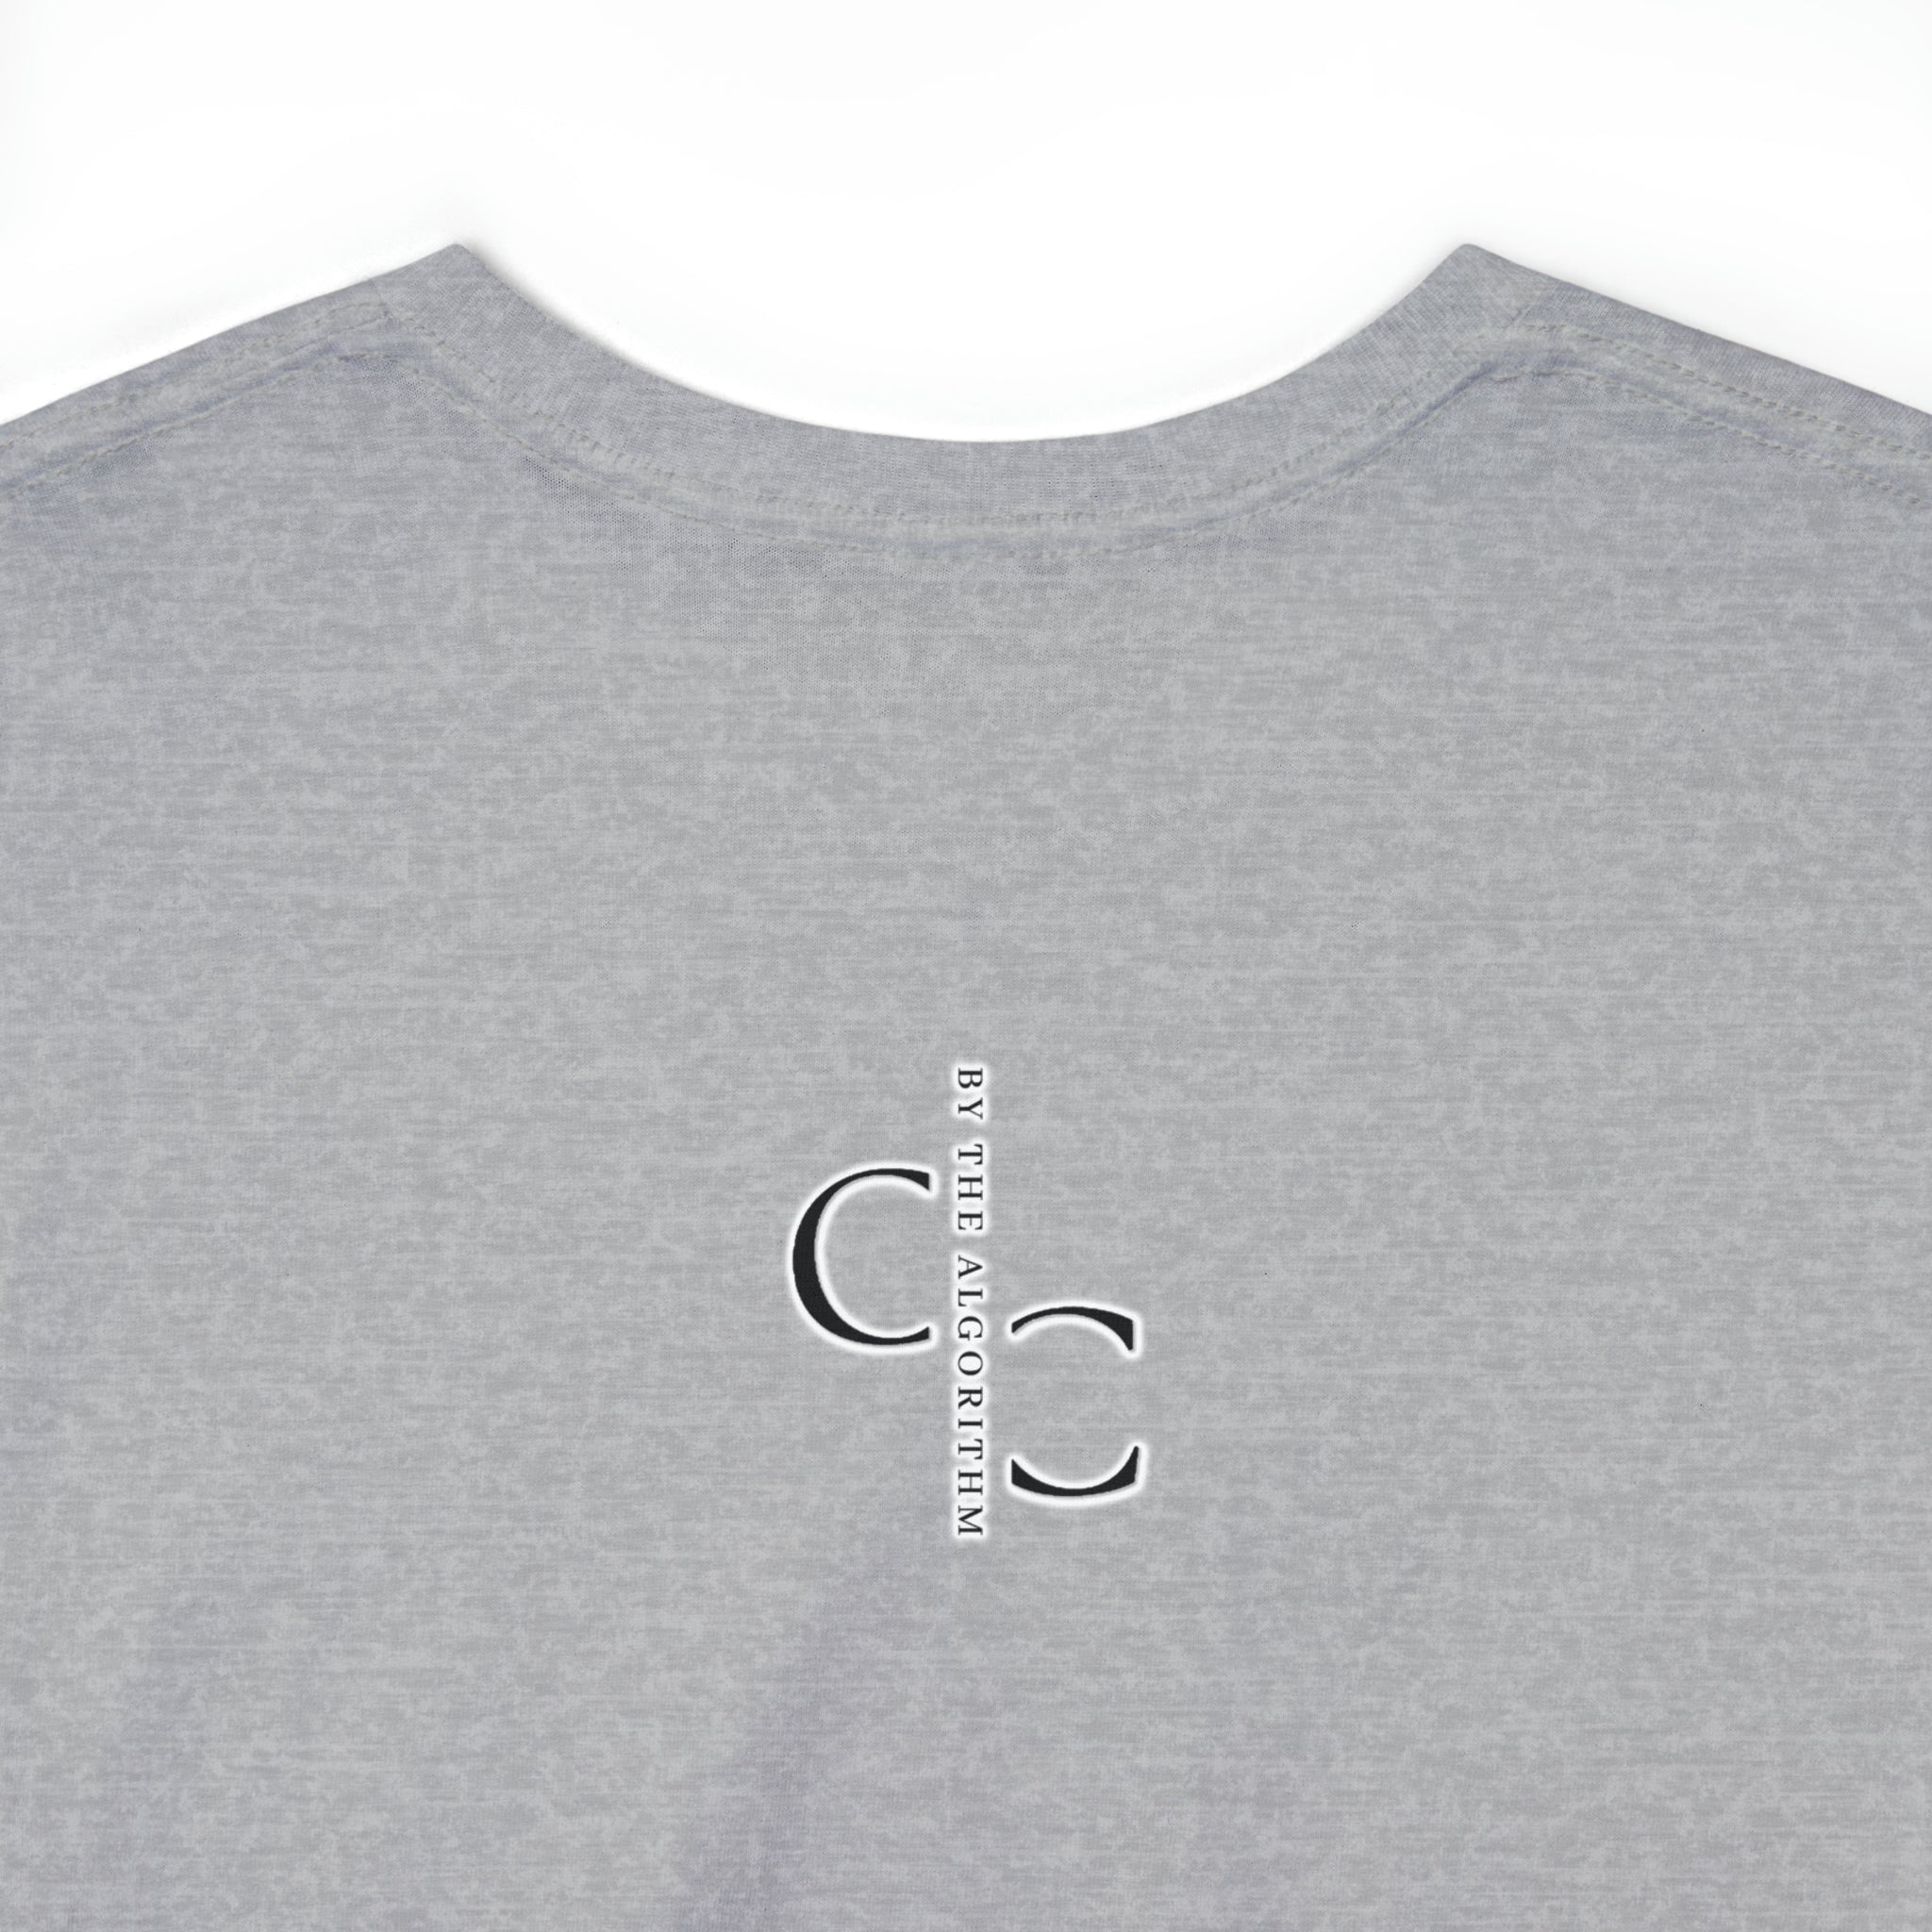 Chai is Bae T-Shirt Design by C&C